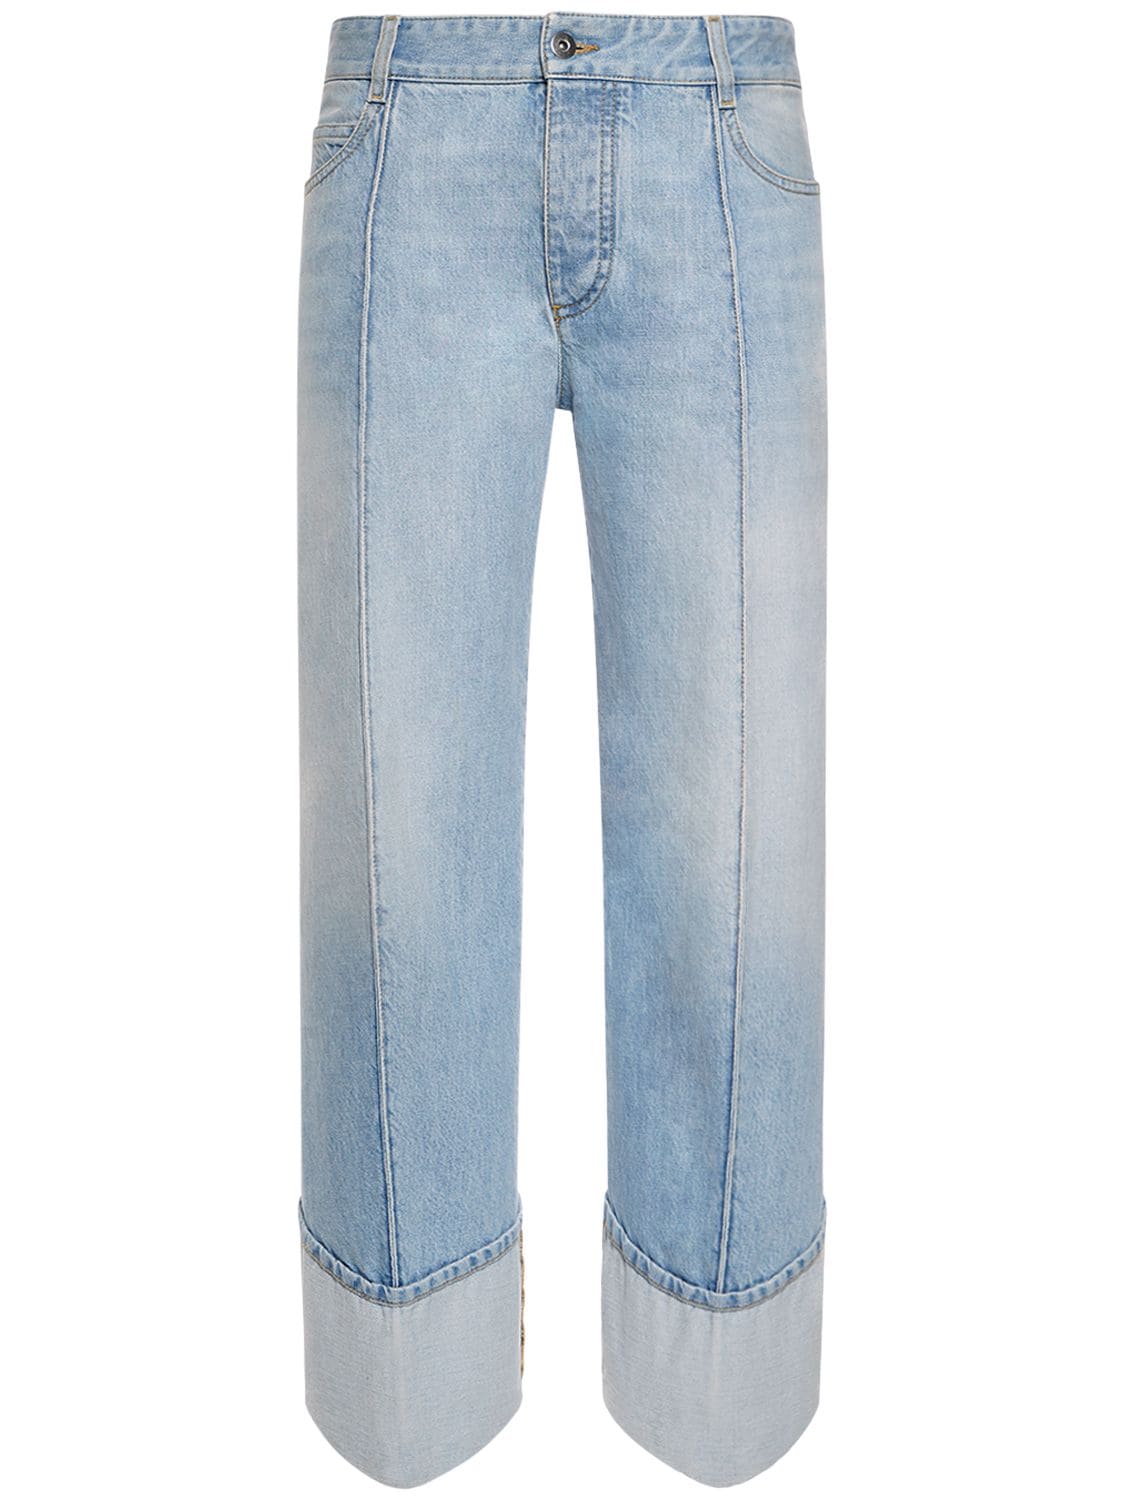 Image of Curved Shape Light Bleached Denim Jeans